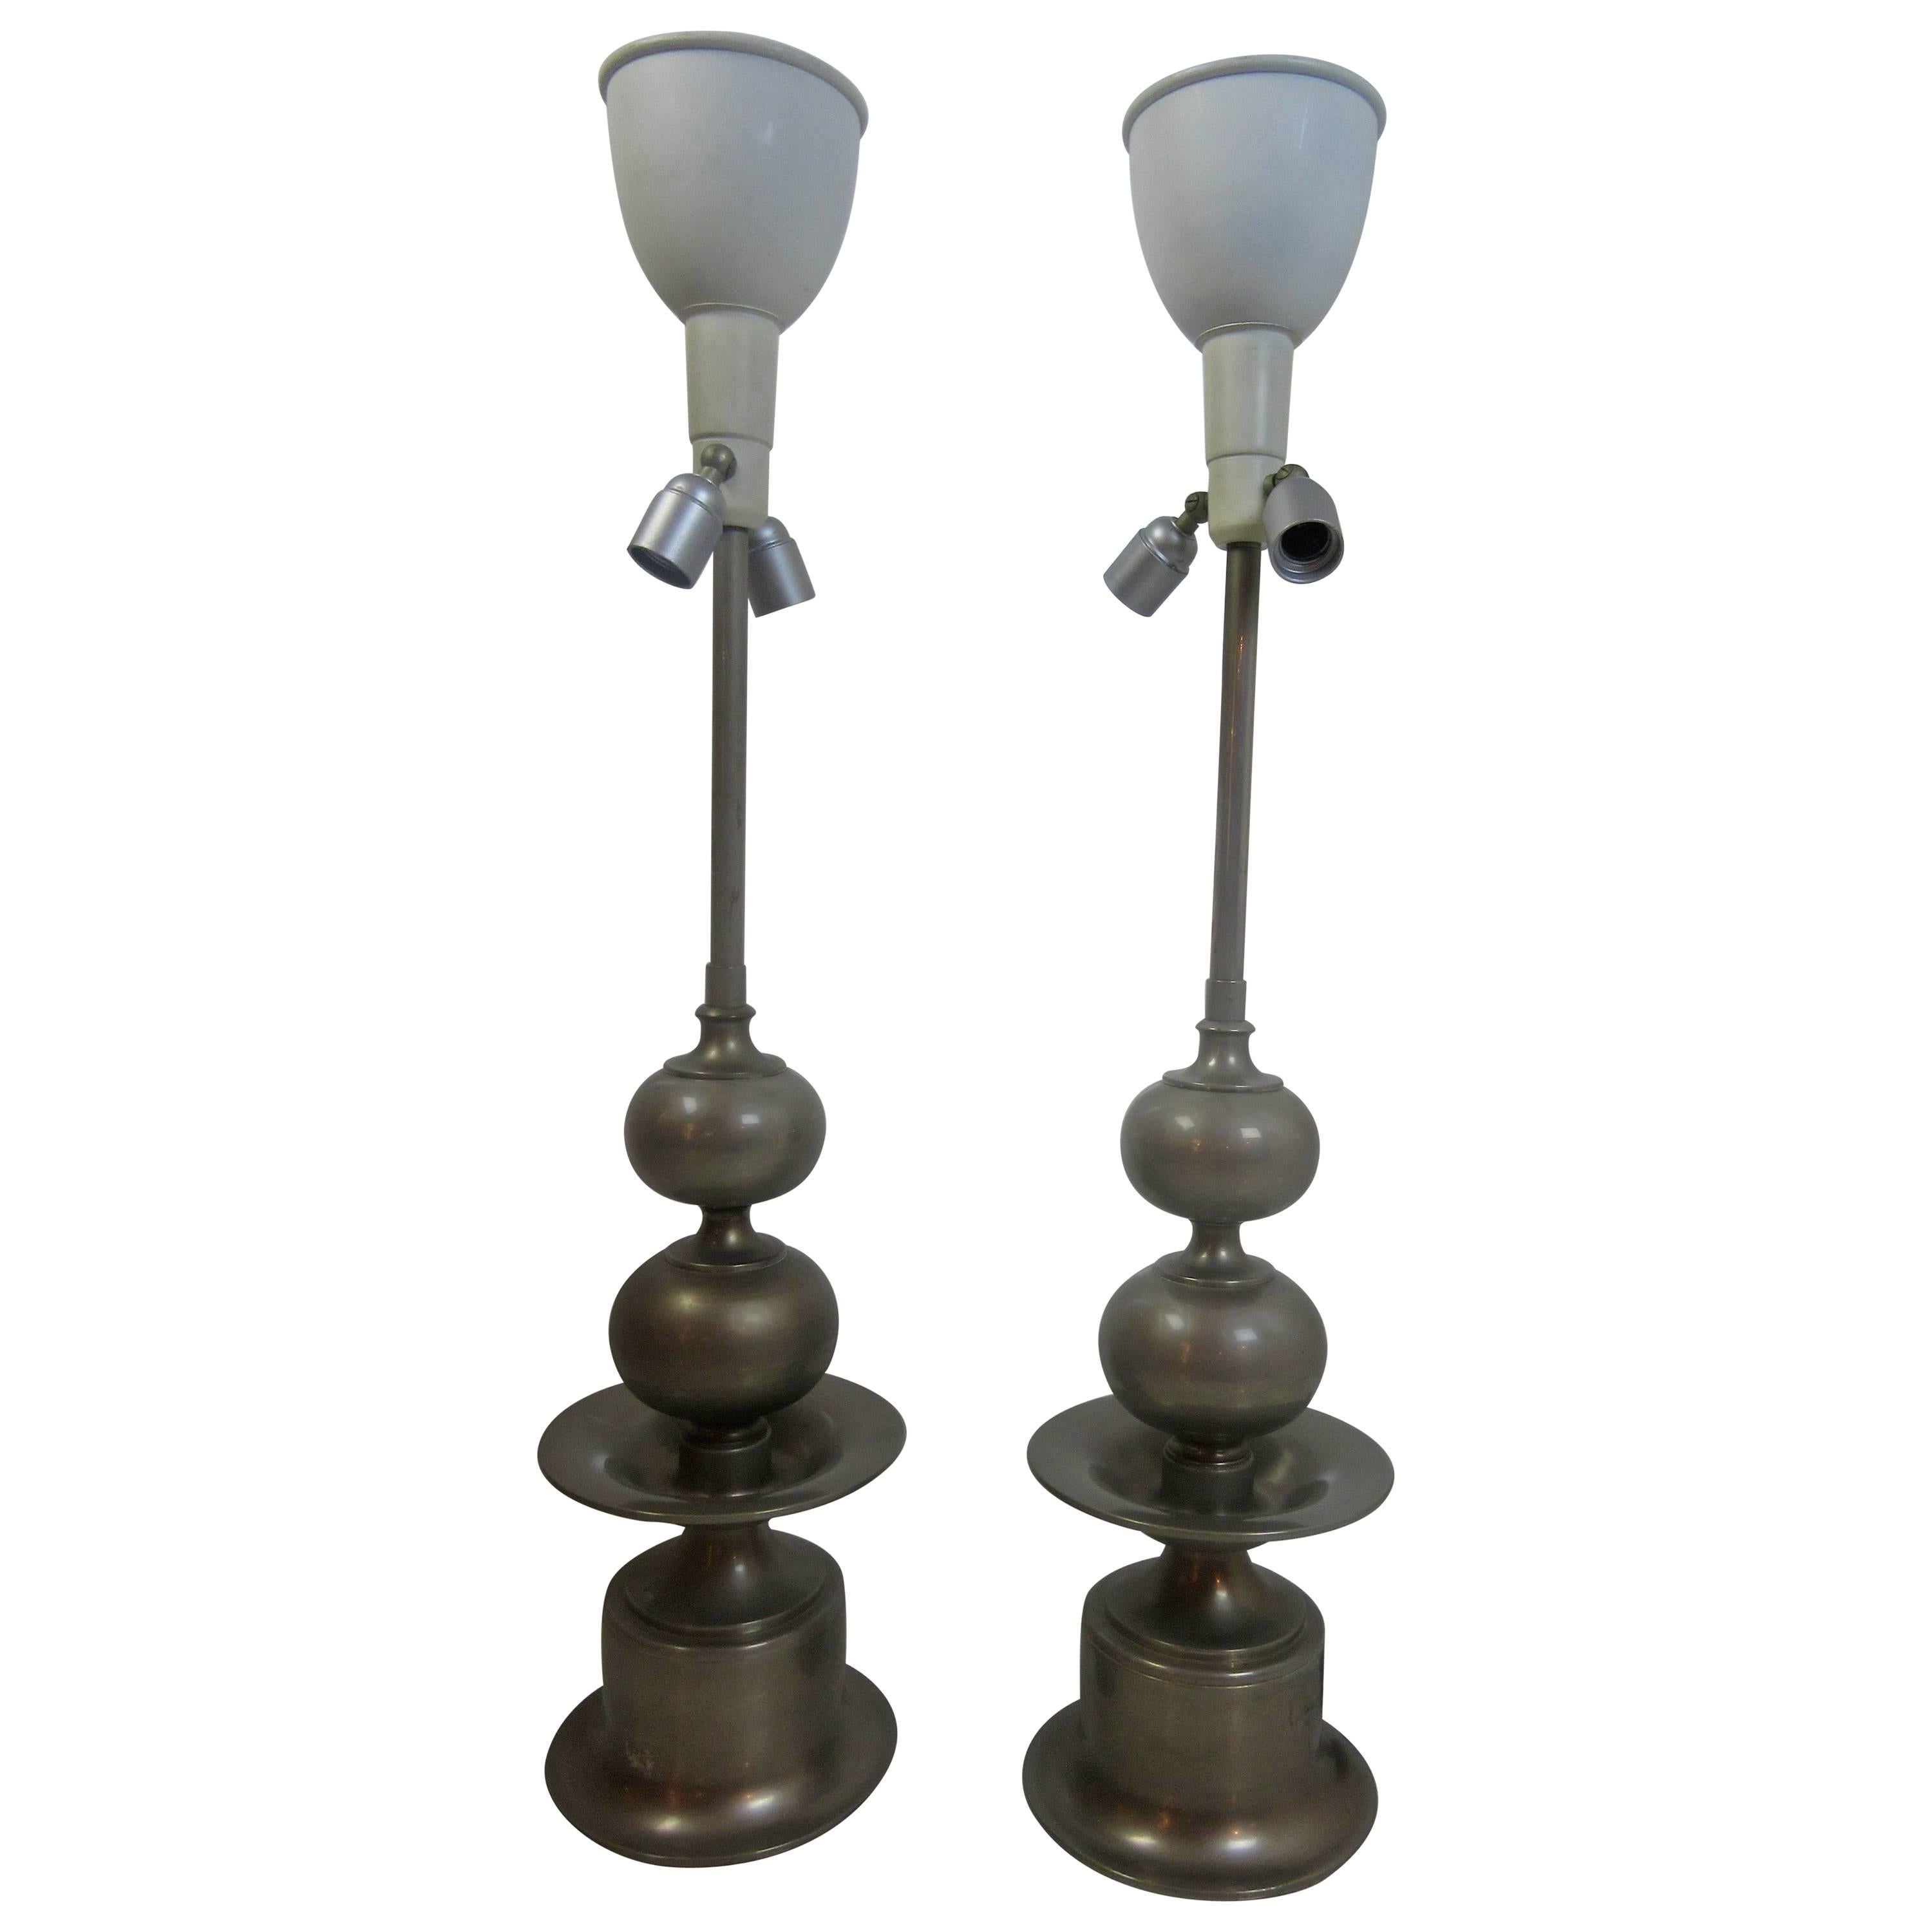 Pair of Italian Moorish/ Moroccan Stacked Ball Table Lamps